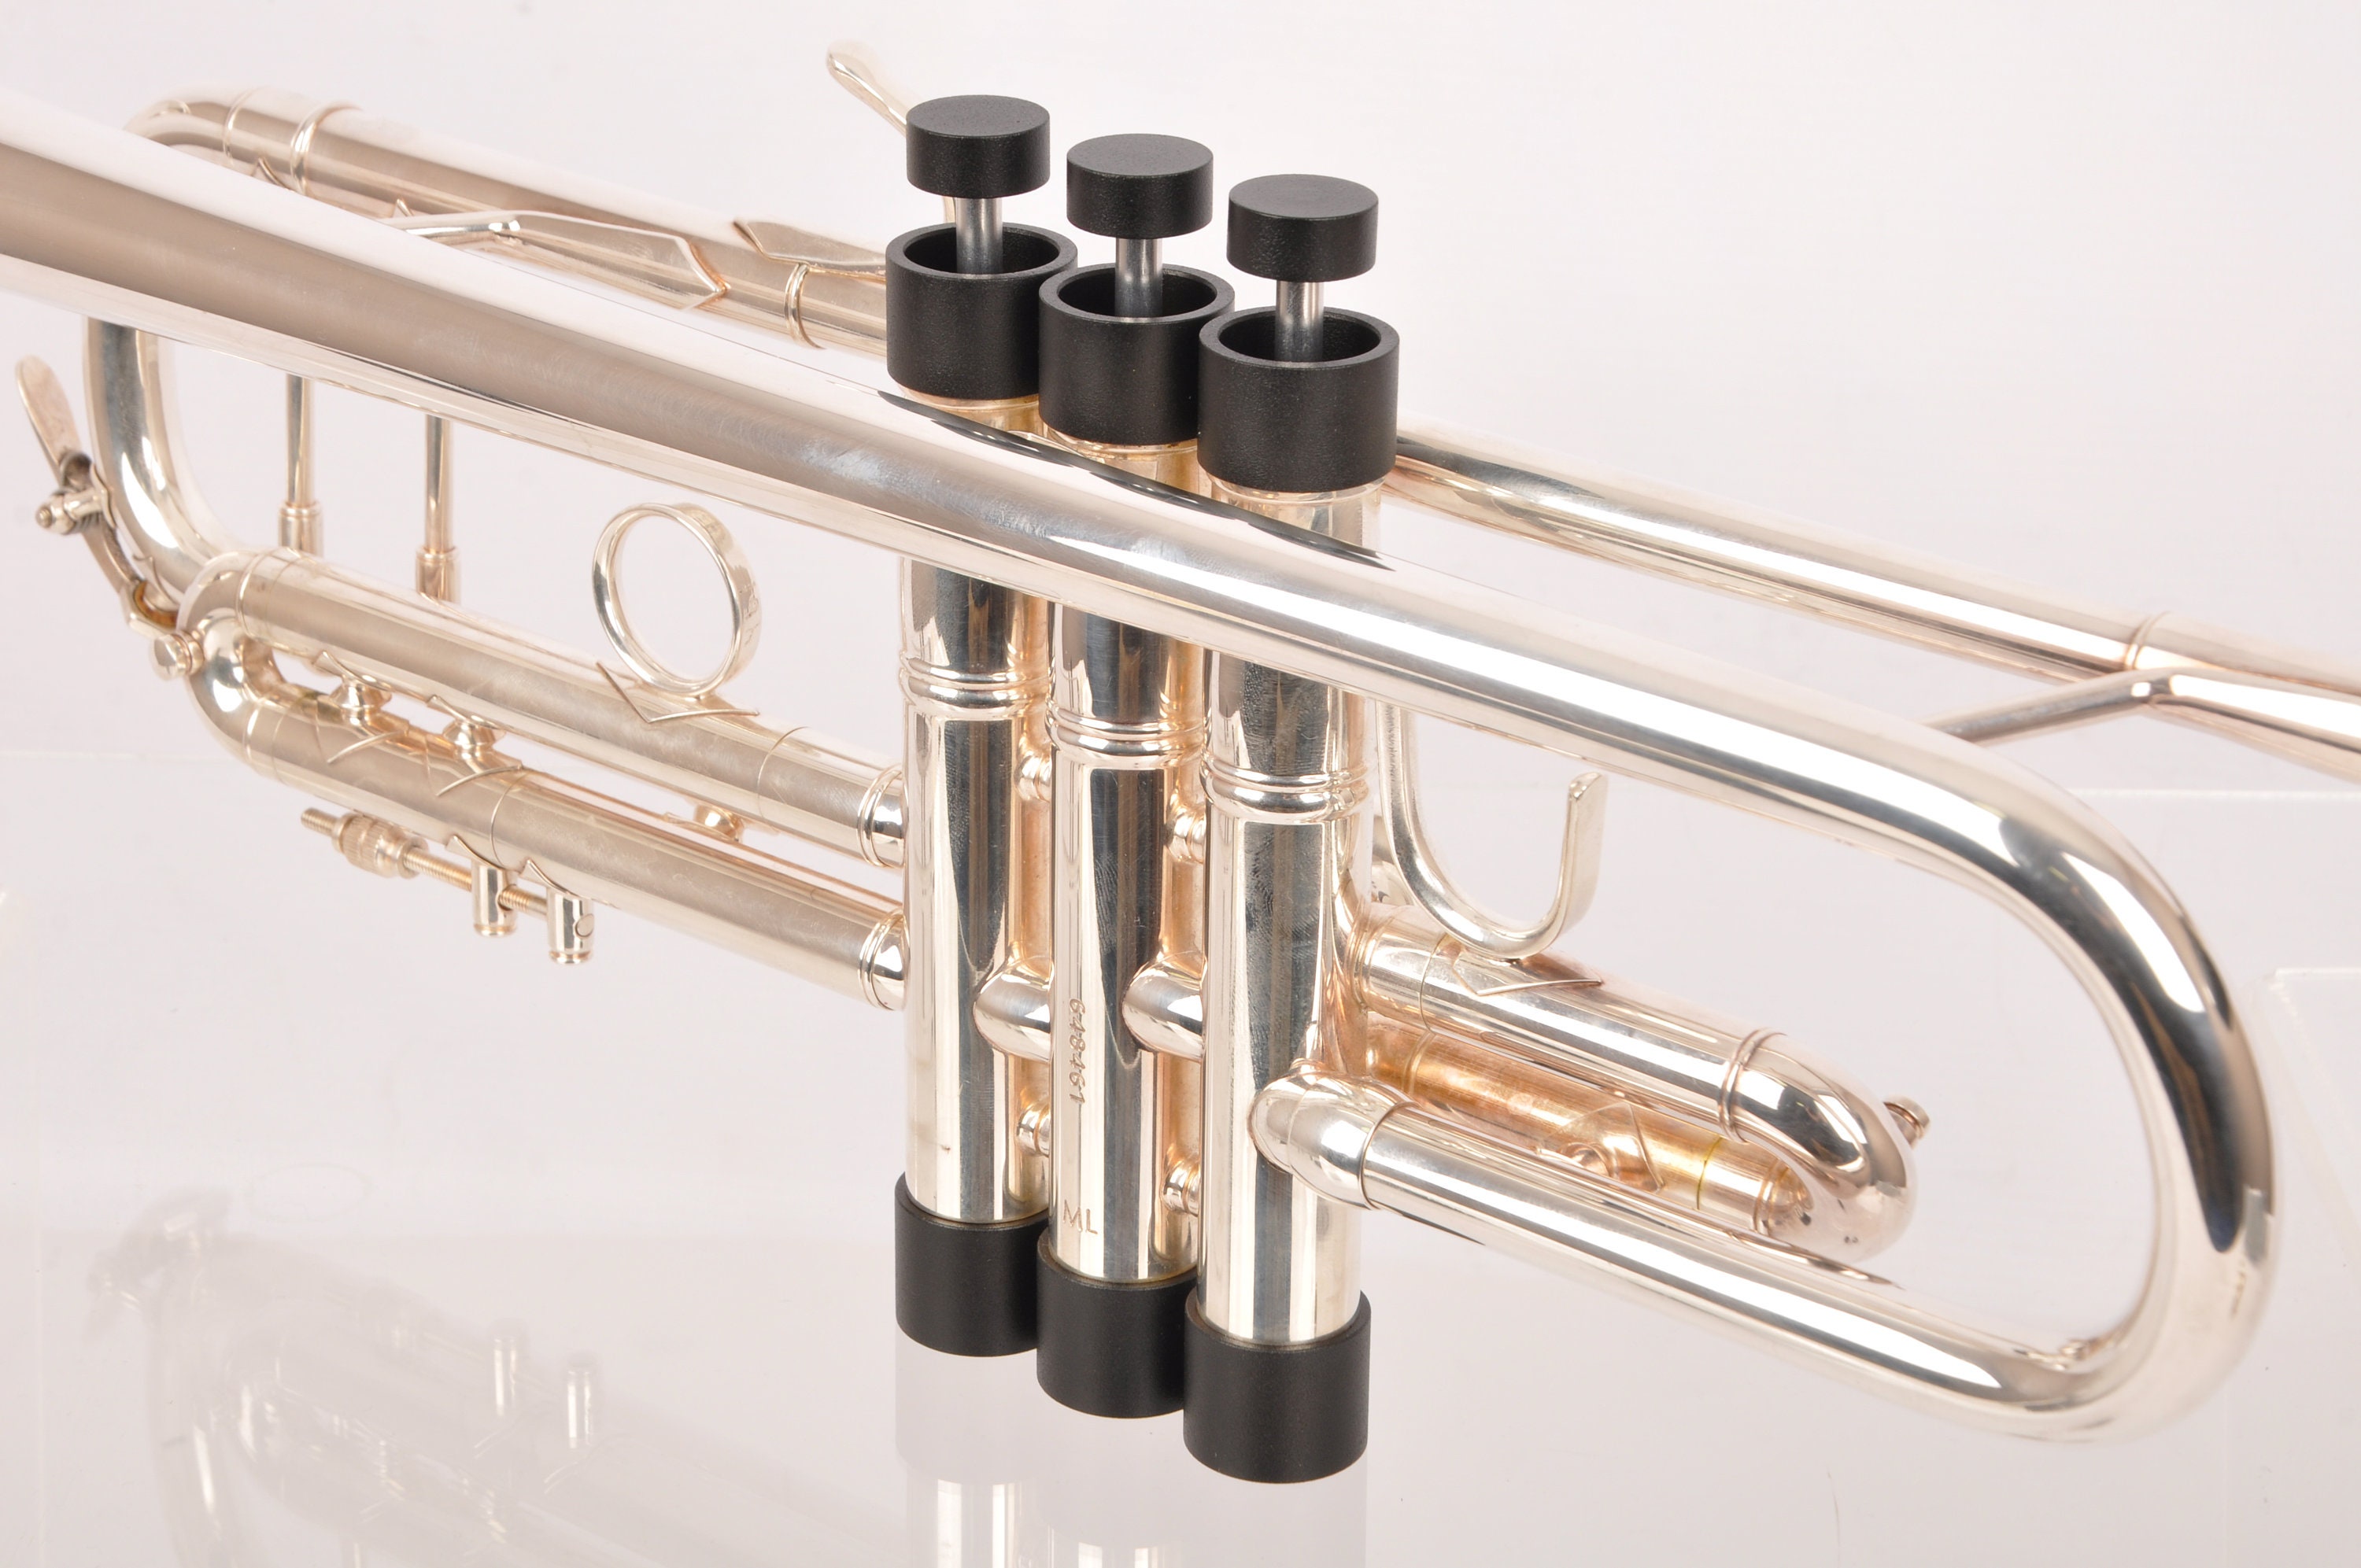 Yamaha HEAVY Trumpet Trim Kit Valve Set Black Edition Trumpet Accessories  by Kgubrass for All Ytryamaha Trumpet Models 